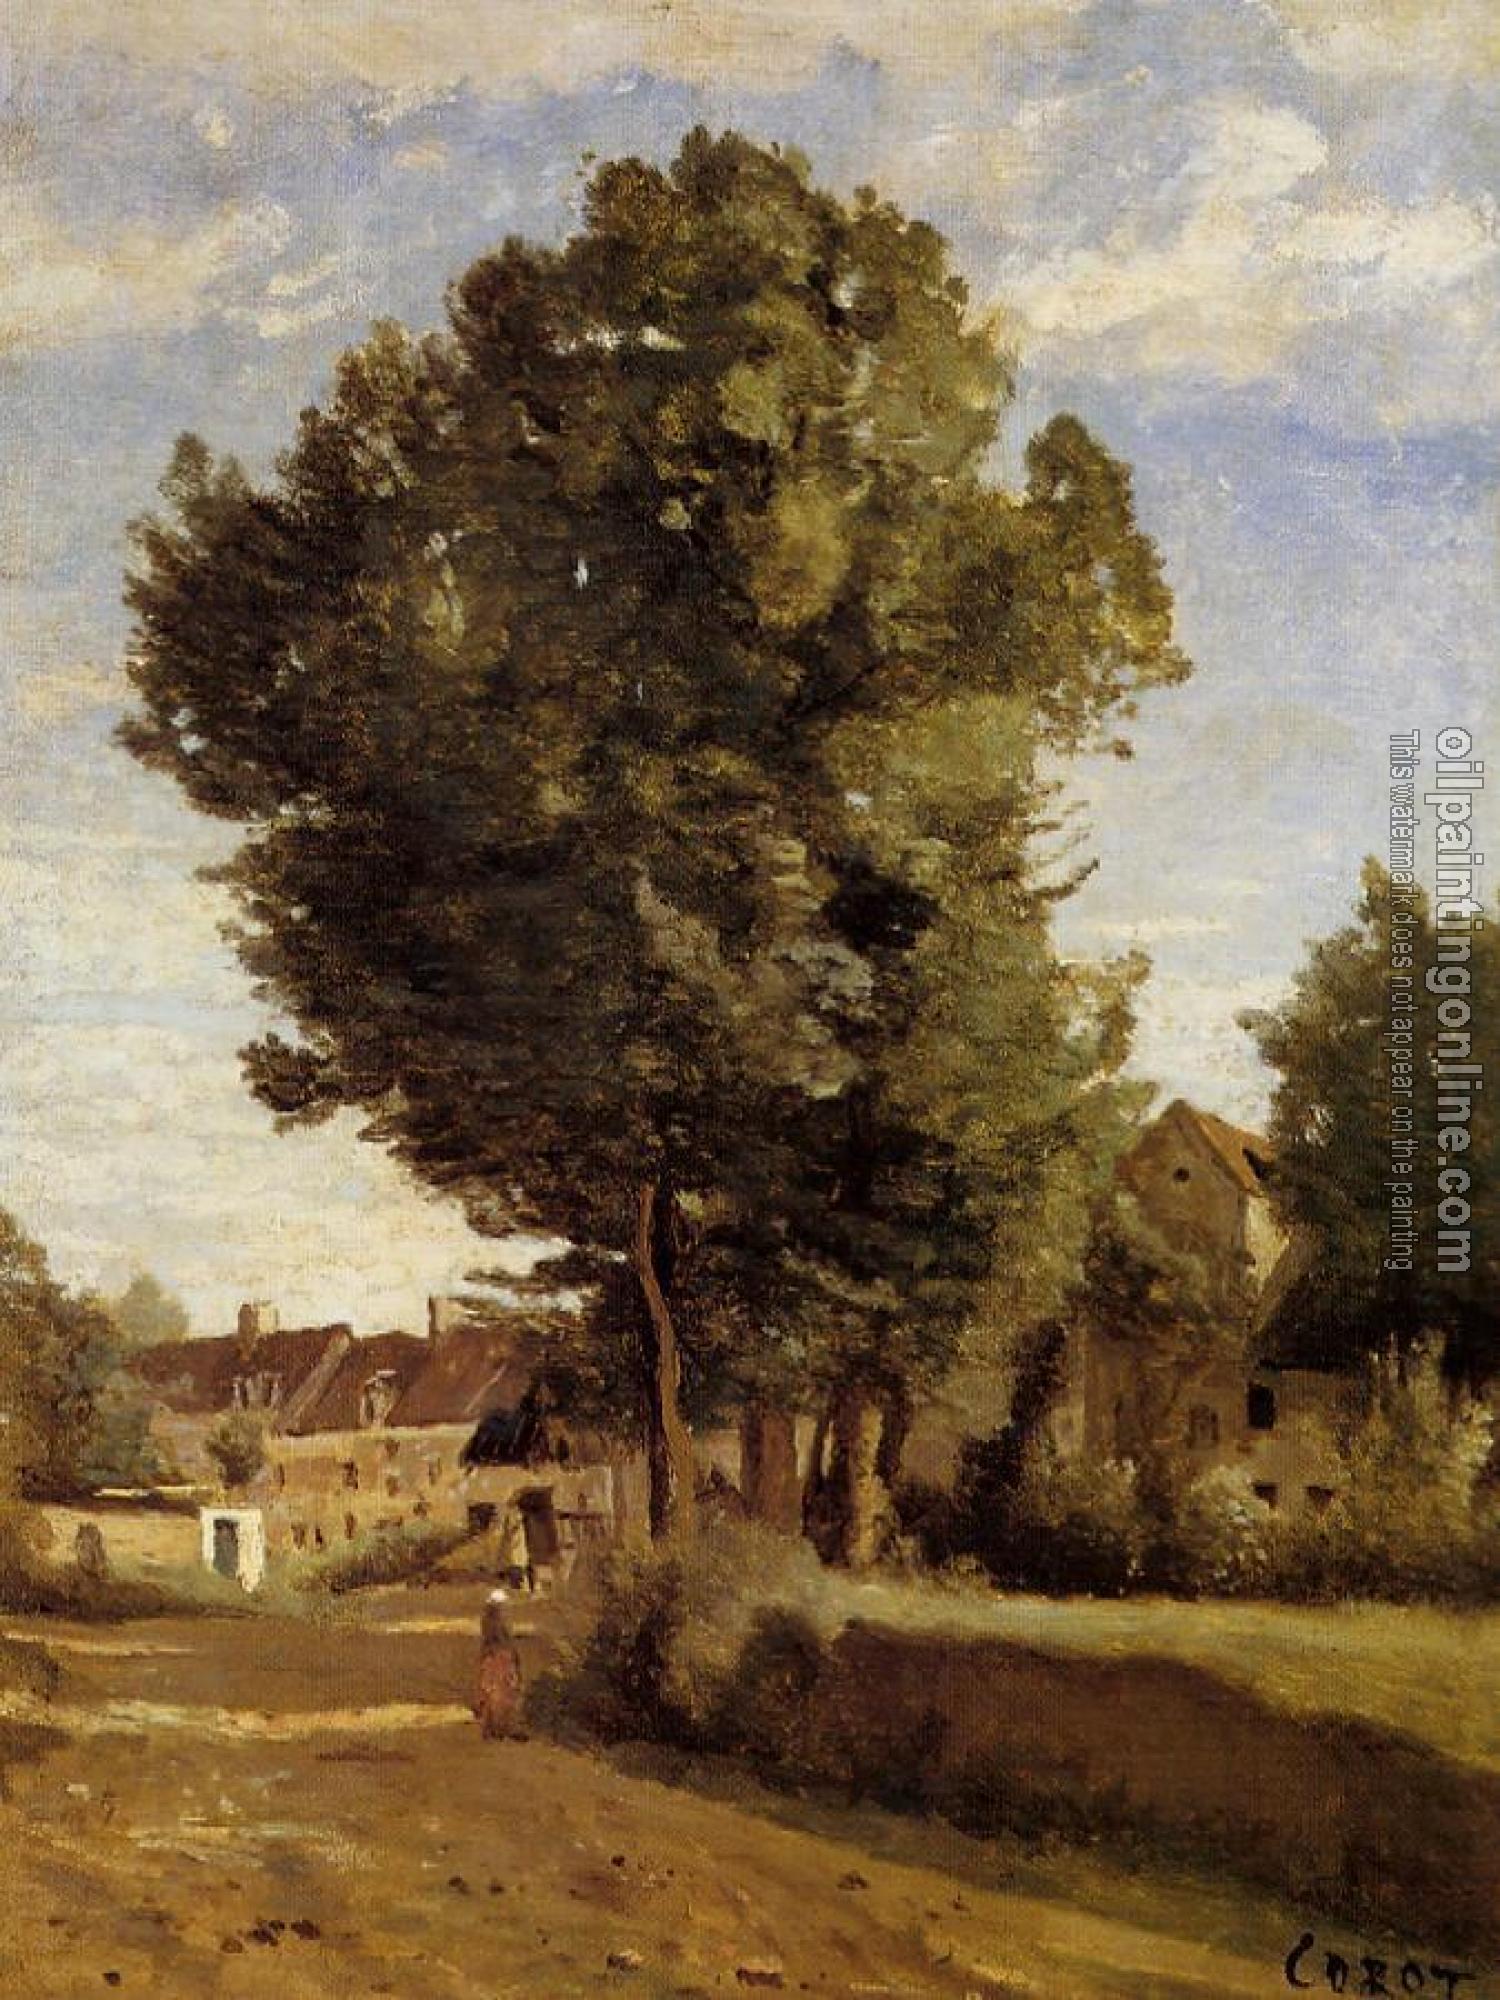 Corot, Jean-Baptiste-Camille - A Village near Beauvais